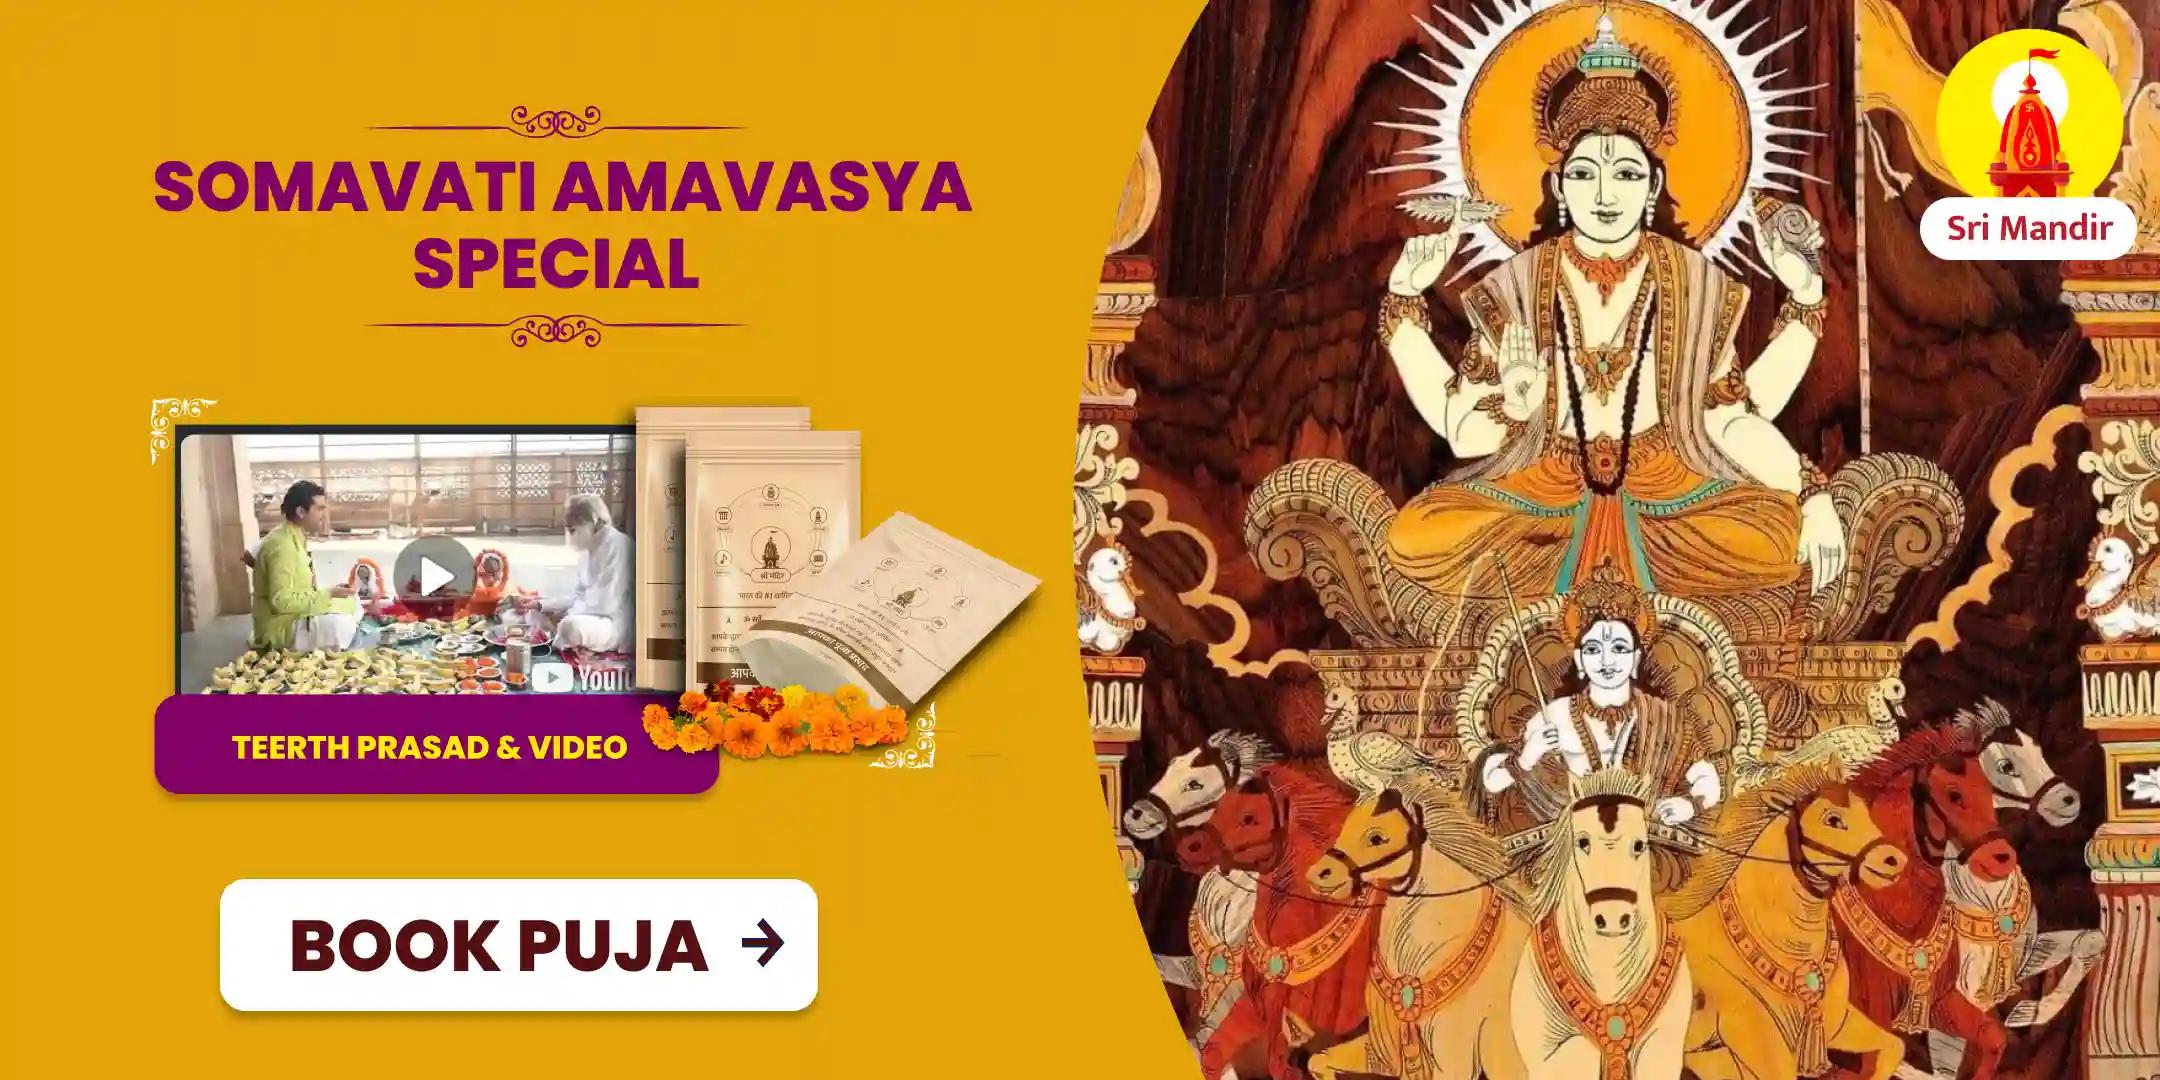 Somavati Amavasya Special Rahu Surya Grahan Dosha Mukti Puja and Rudrabhishek for Overcoming Financial Challenges and Relief from Stress